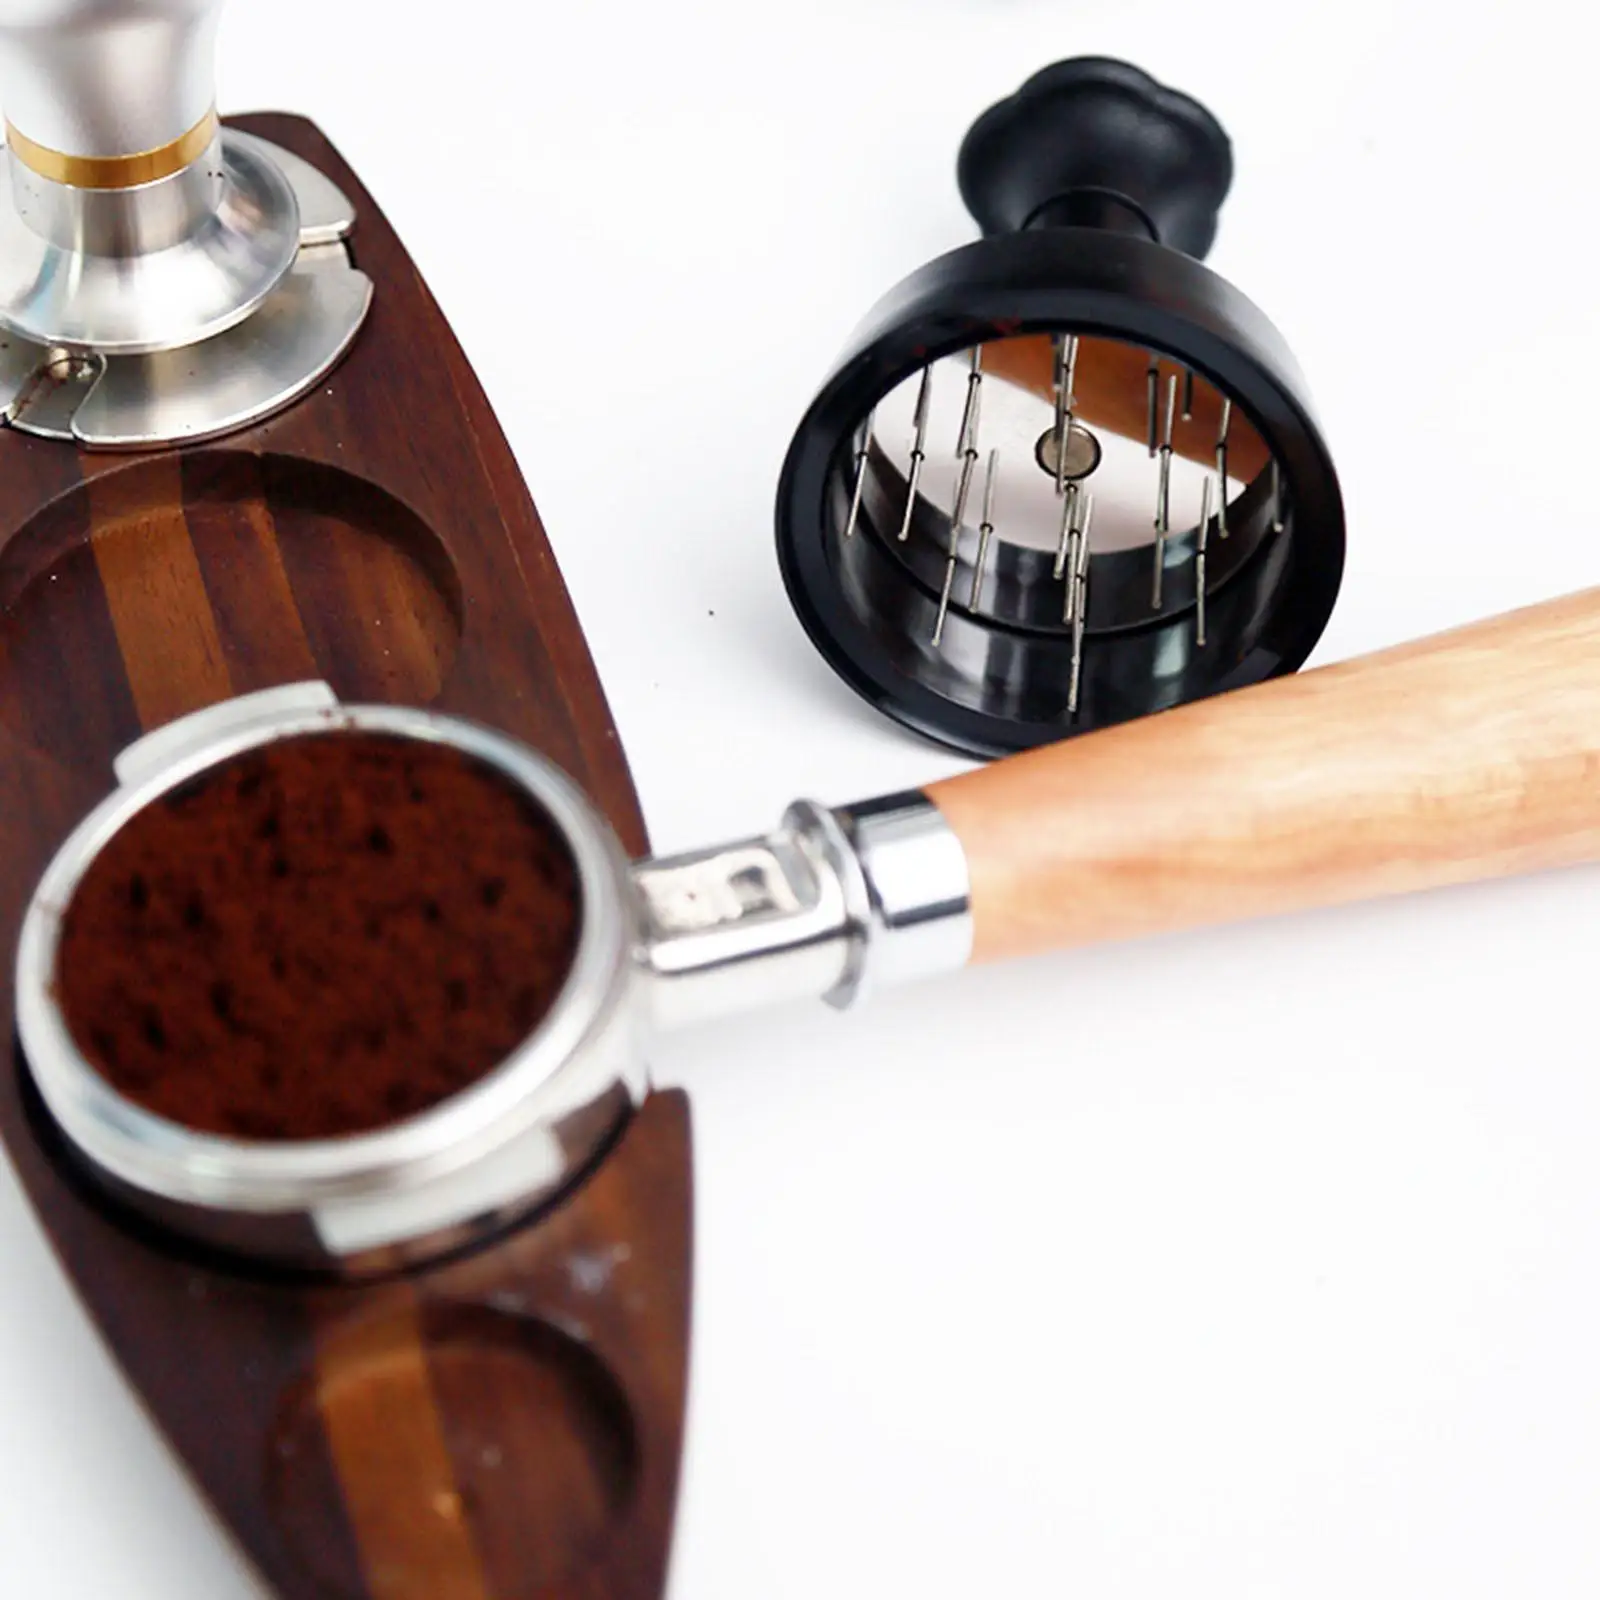 Coffee Tamper Distributor Espresso Distribution Tool for Home